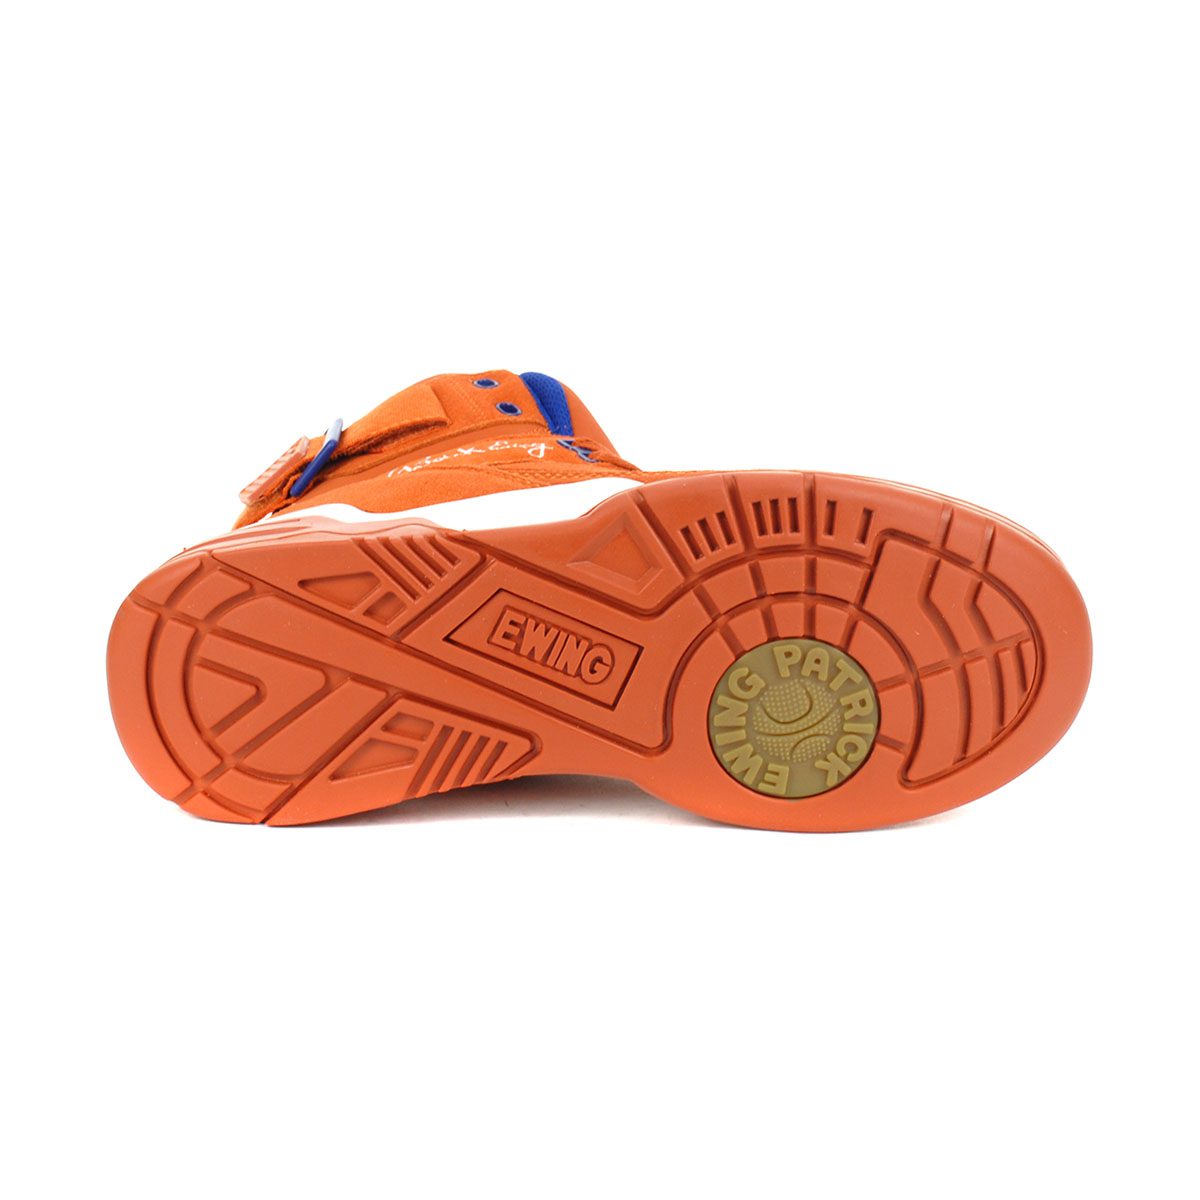 Patrick Ewing 33 Hi Men's Athletic Sneakers Basketball Shoes Knicks White  Orange